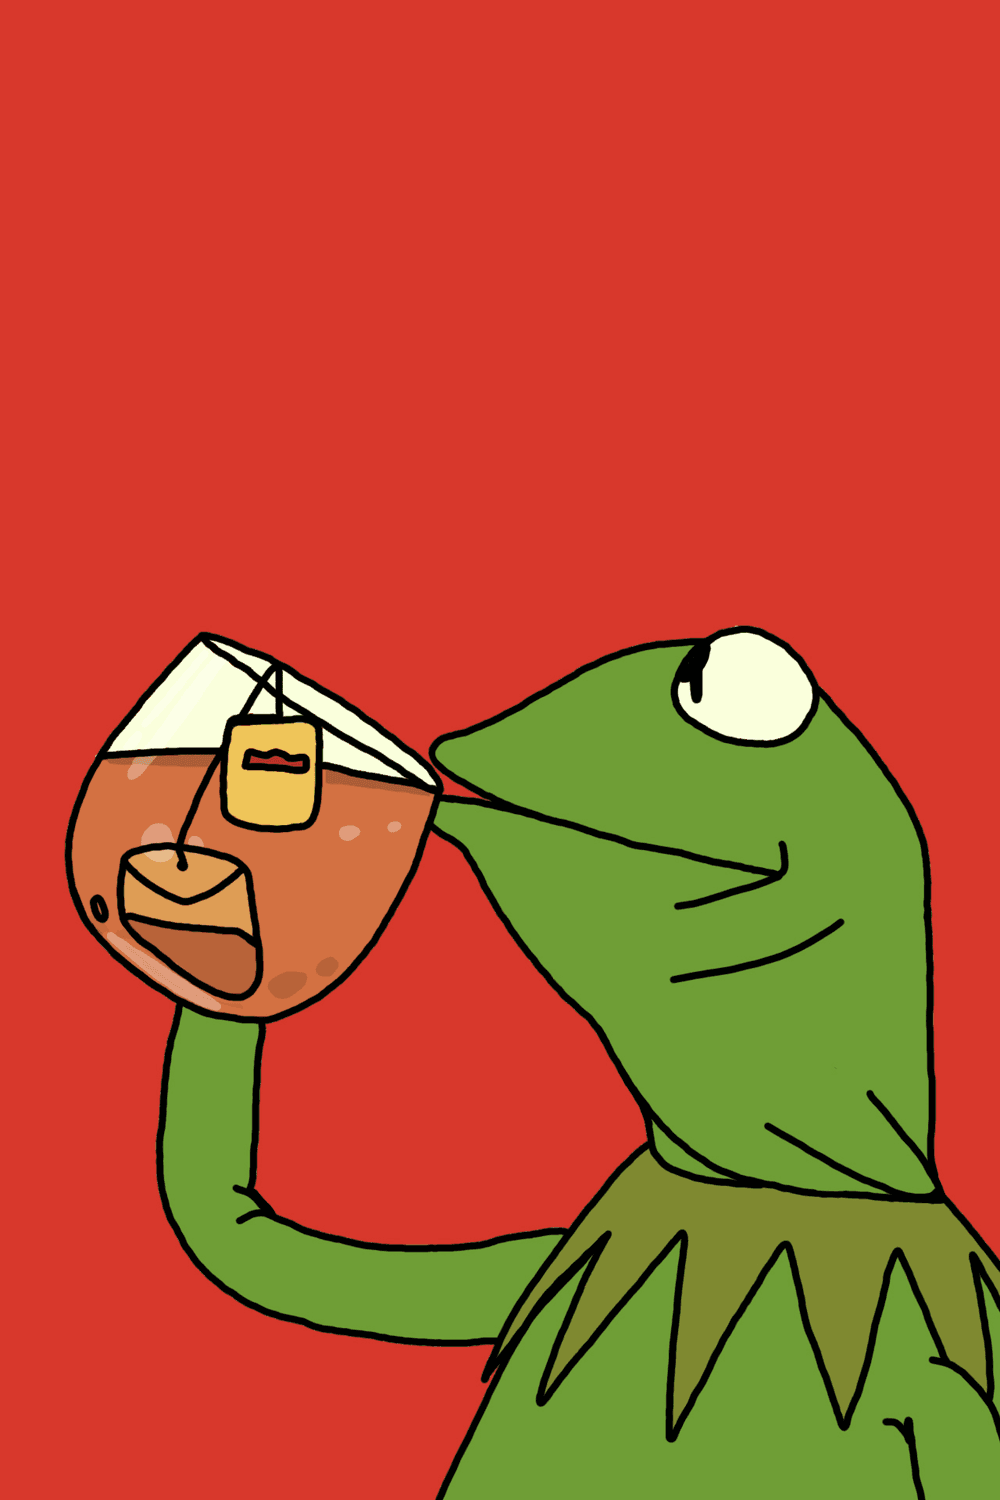 kermit the frog drinking beer